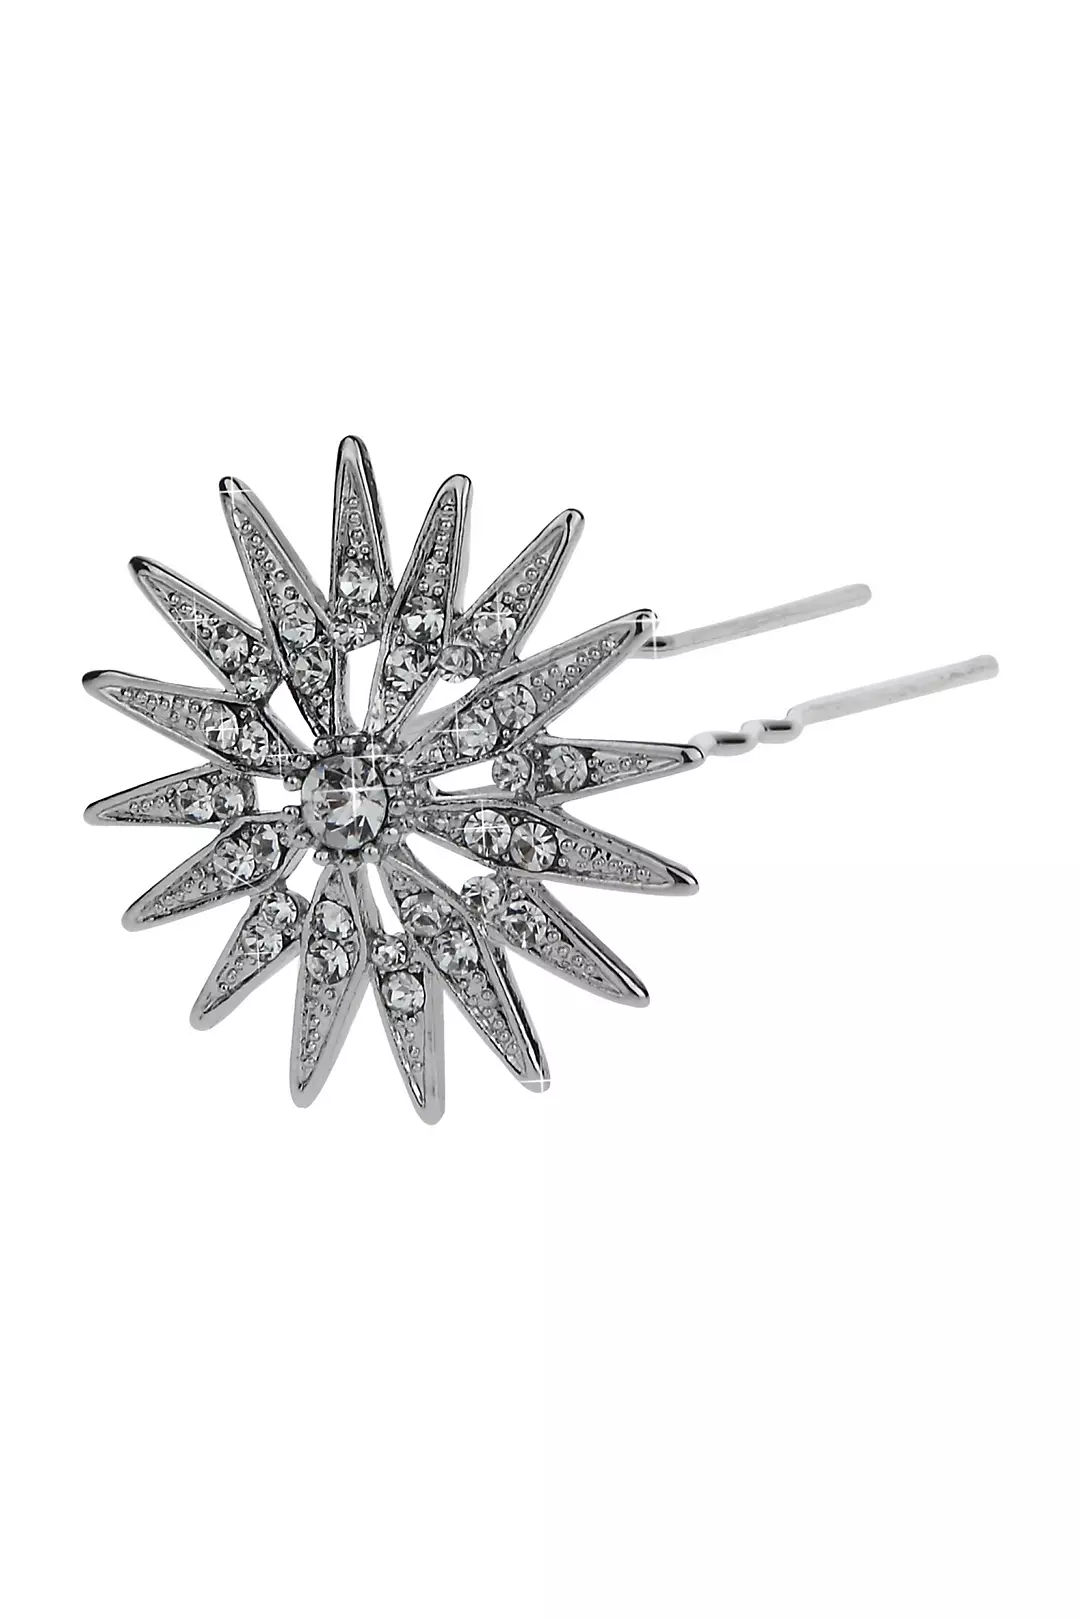 Antique Silver Star Mini Hair Pin Set Image